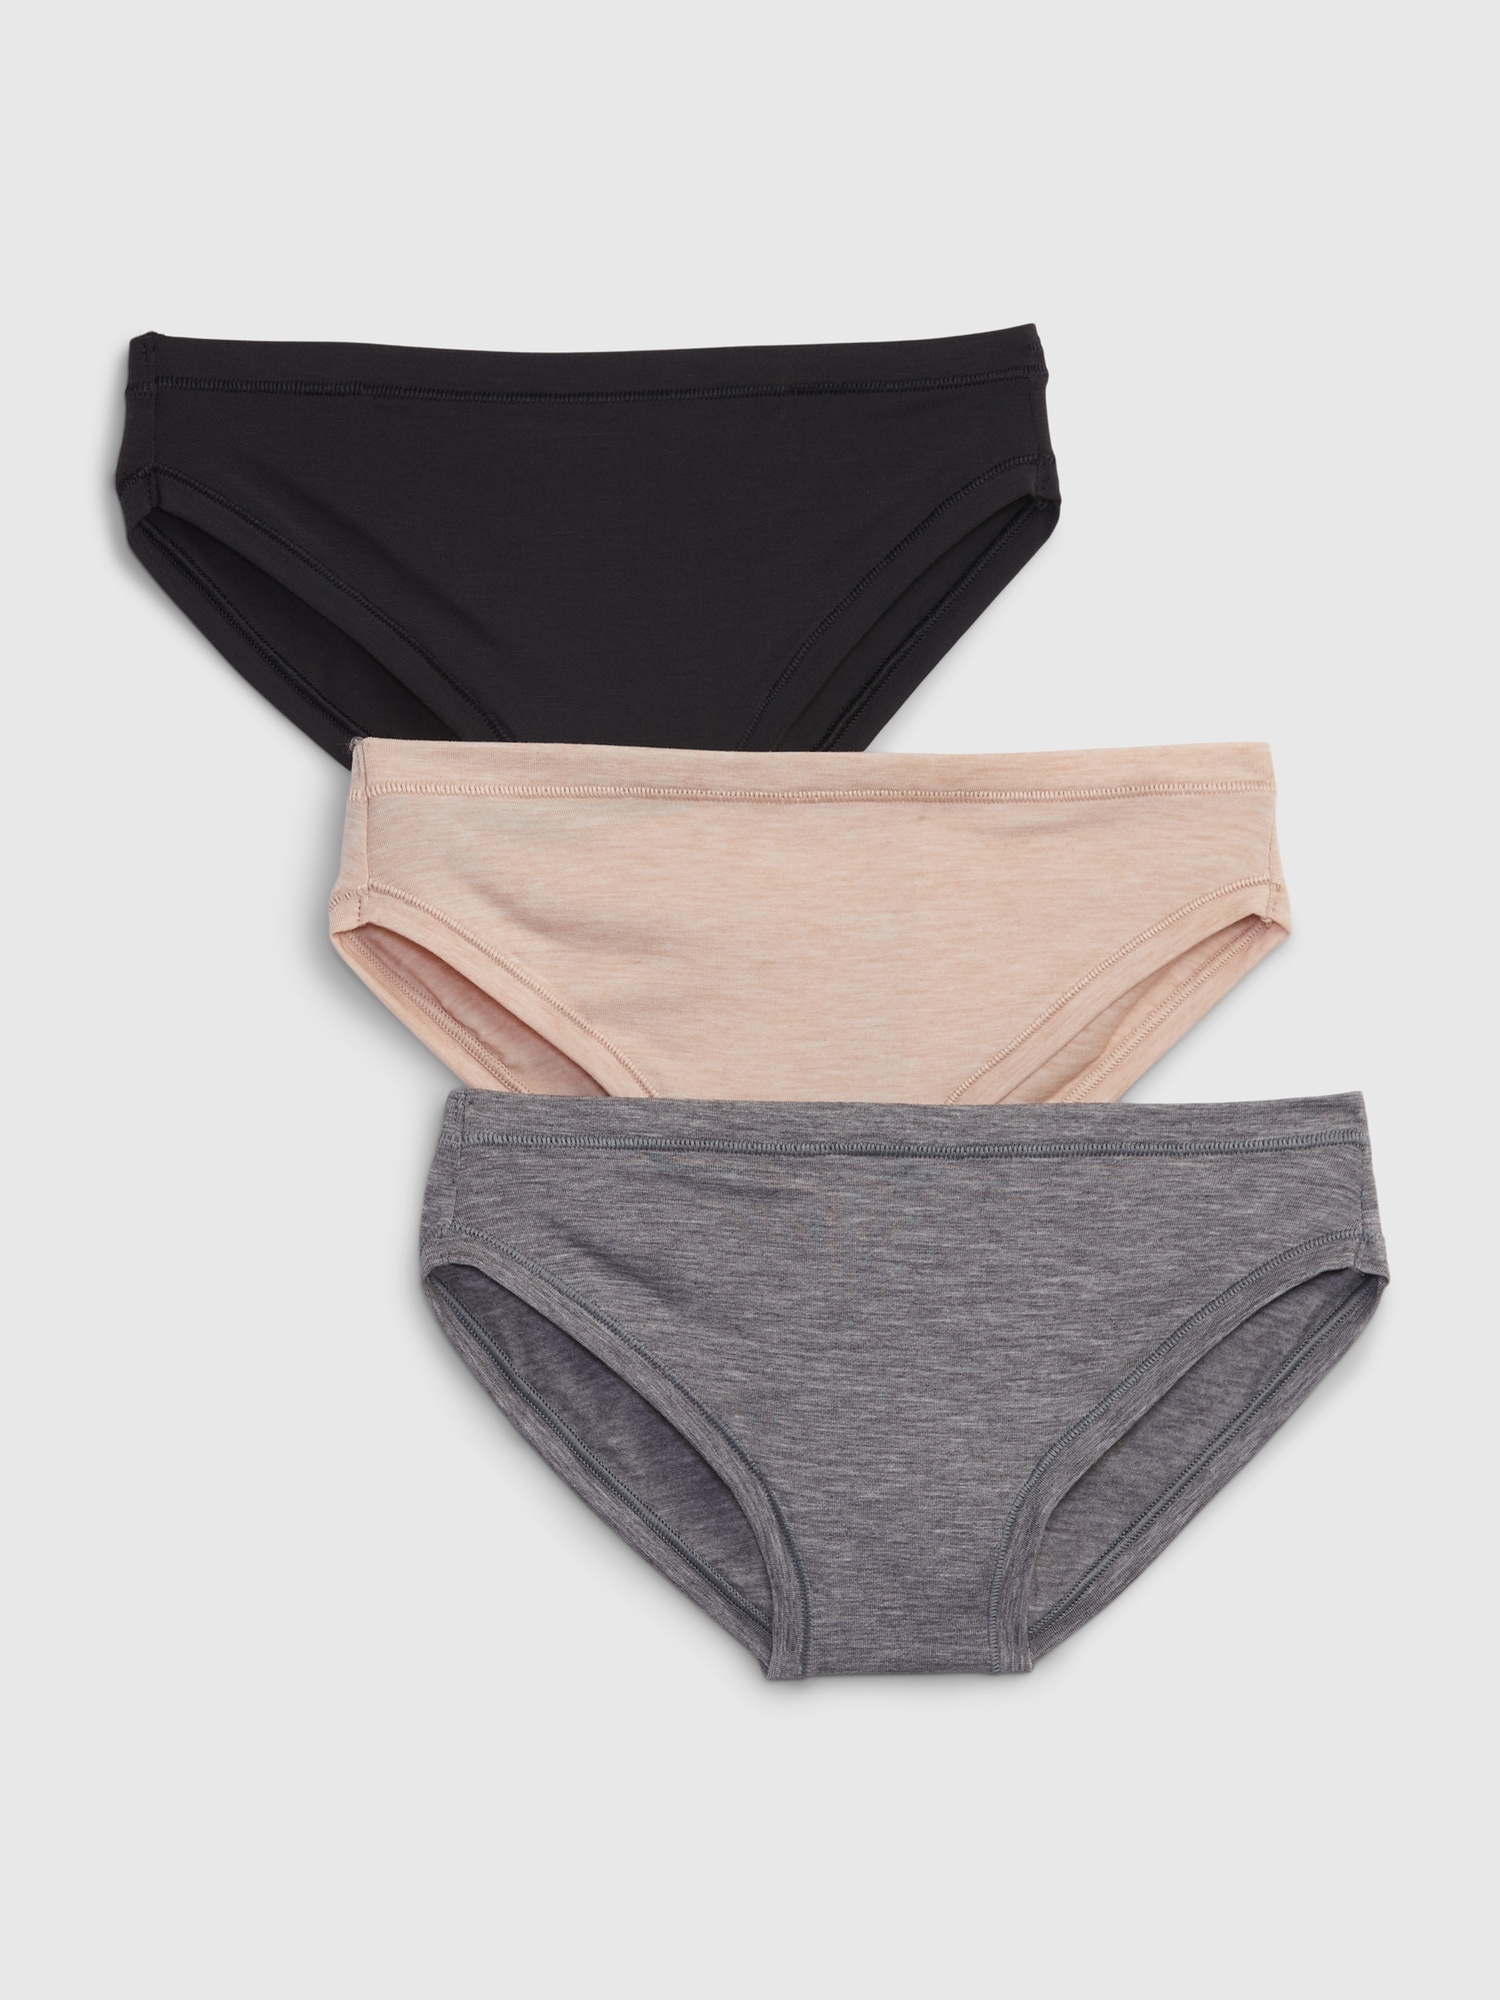 GAP Women's 3-Pack Breathe Hipster Underpants Underwear, Multi, X